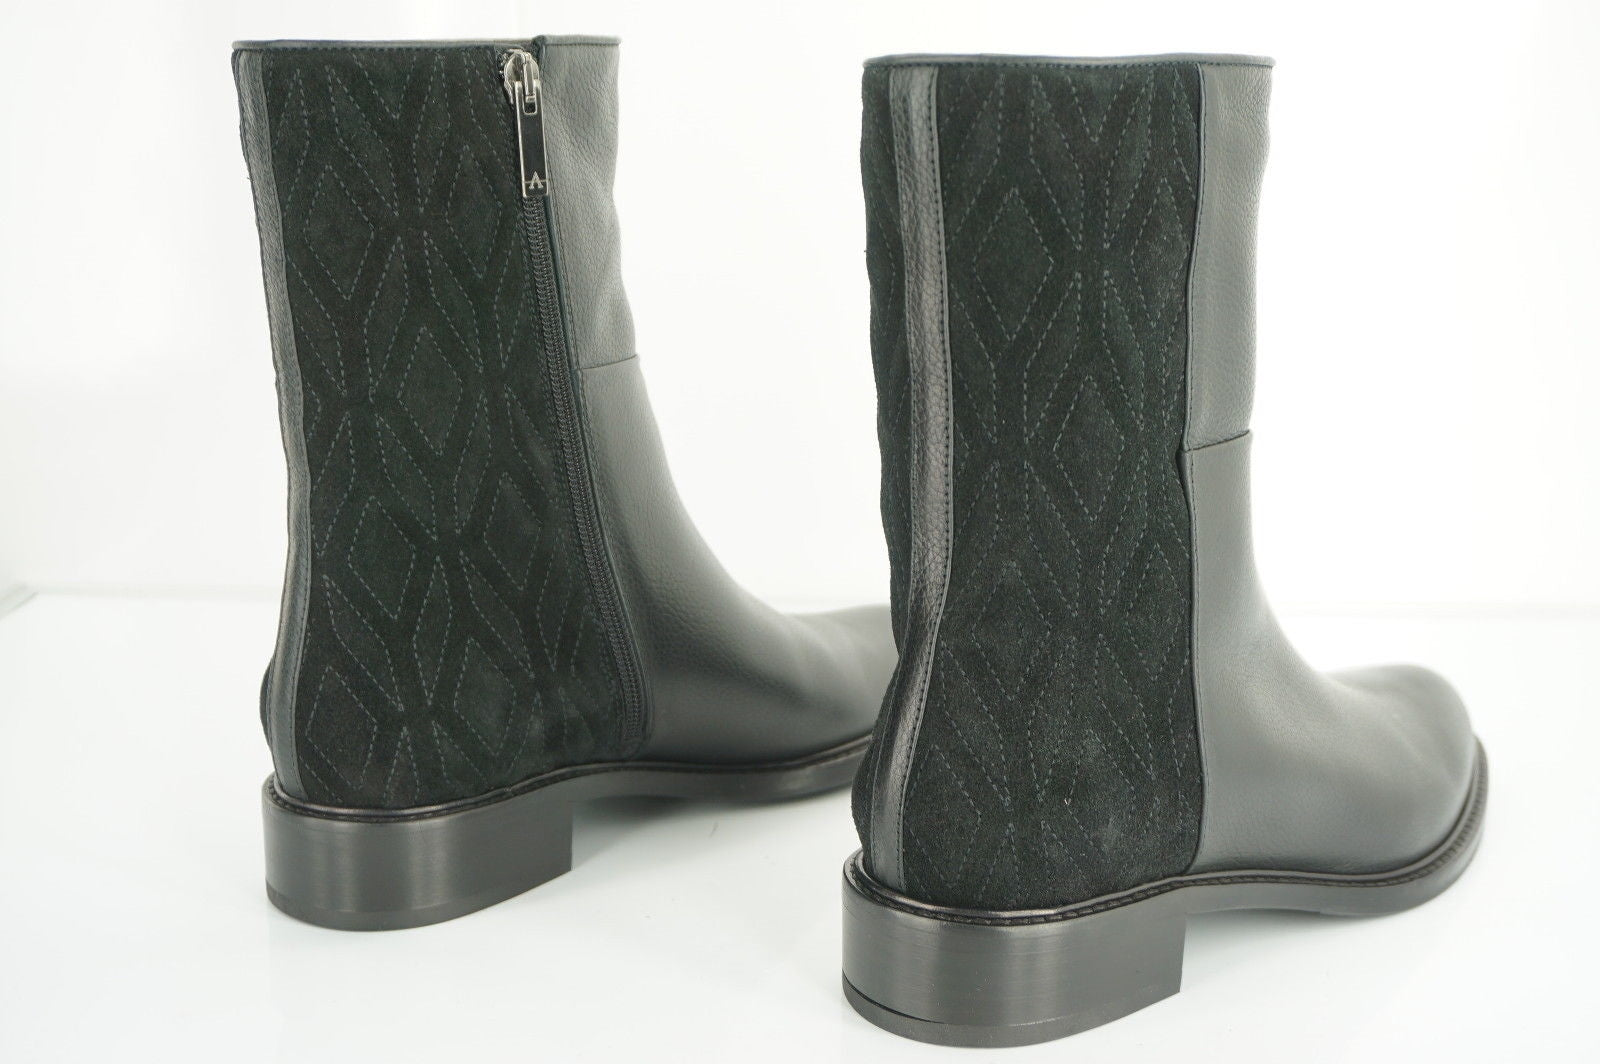 Aquatalia Black Suede Back Leather Gabrina Biker Ankle Boots Size 36.5 New $595